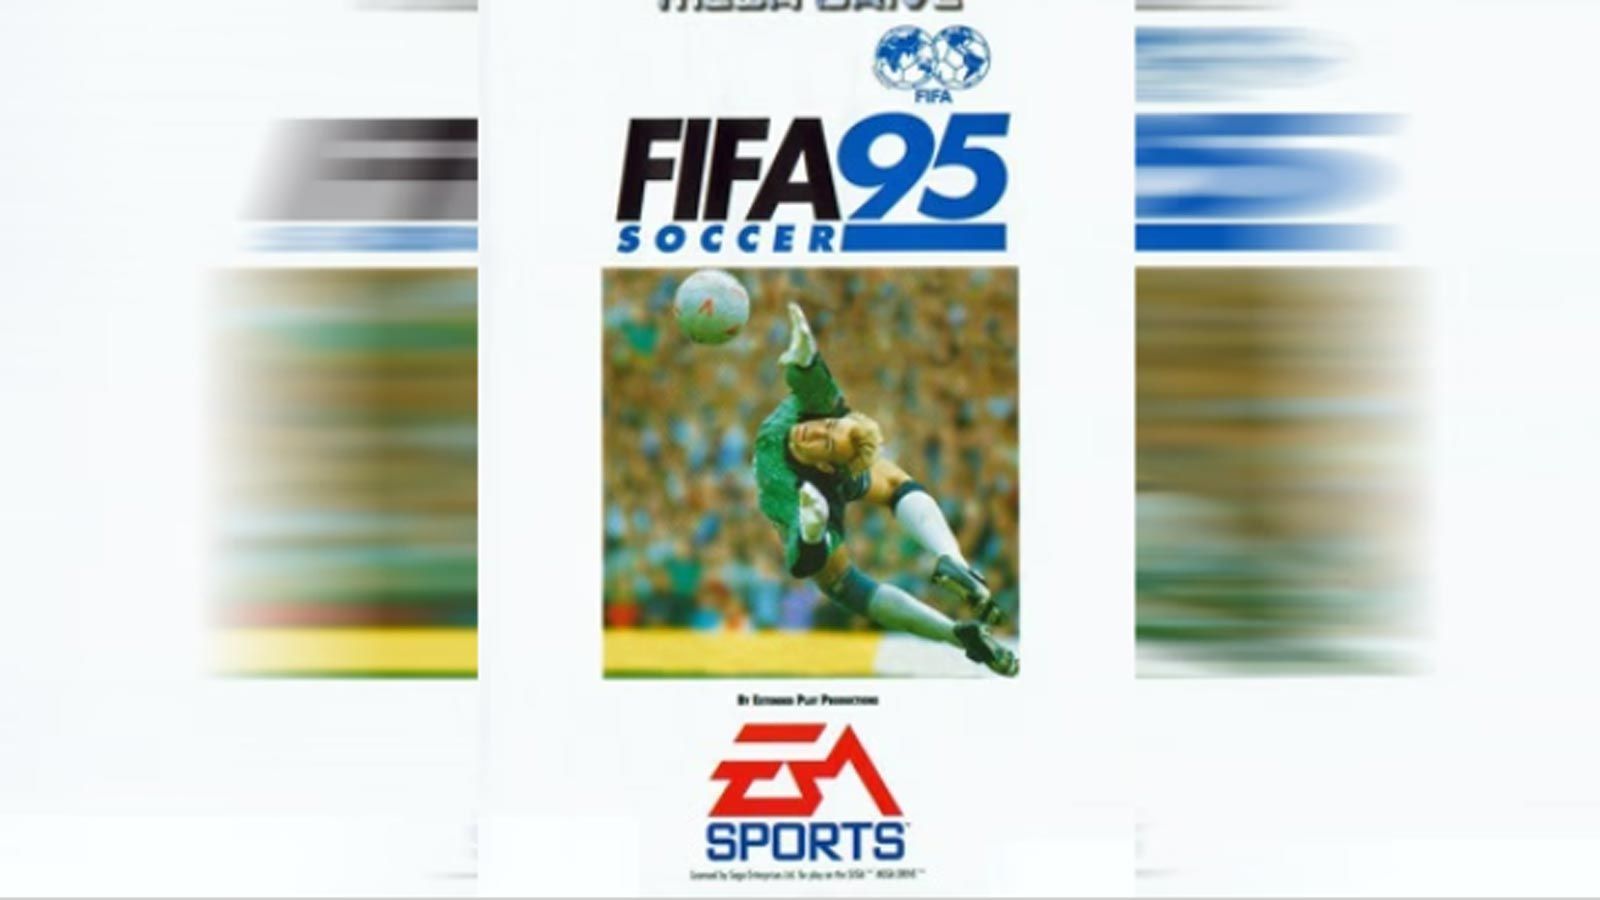 
                <strong>FIFA 95</strong><br>
                FIFA 95 - Cover-Spieler: Erik Thorstvedt.
              